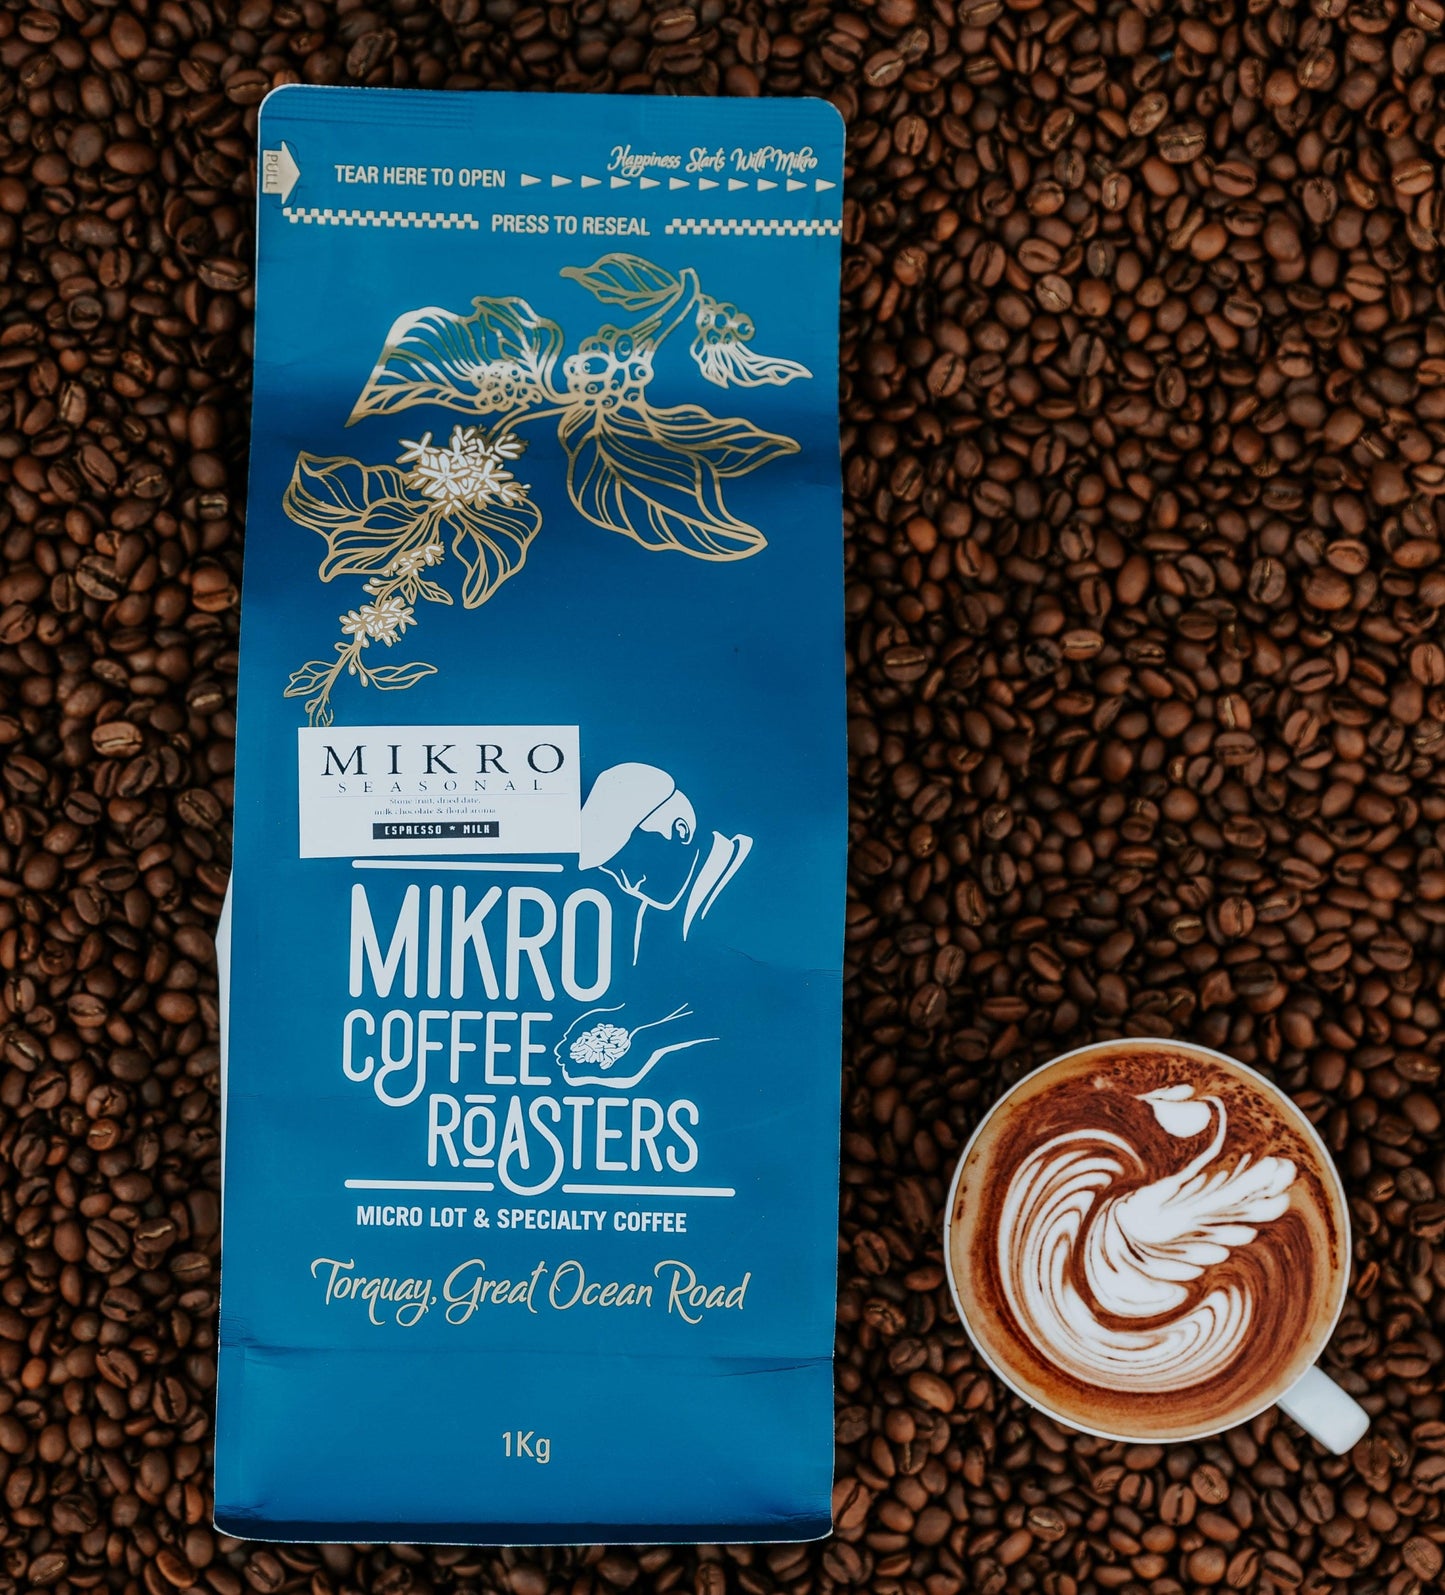 Mikro Seasonal Espresso Blend - Mikro Coffee Roasters Torquay